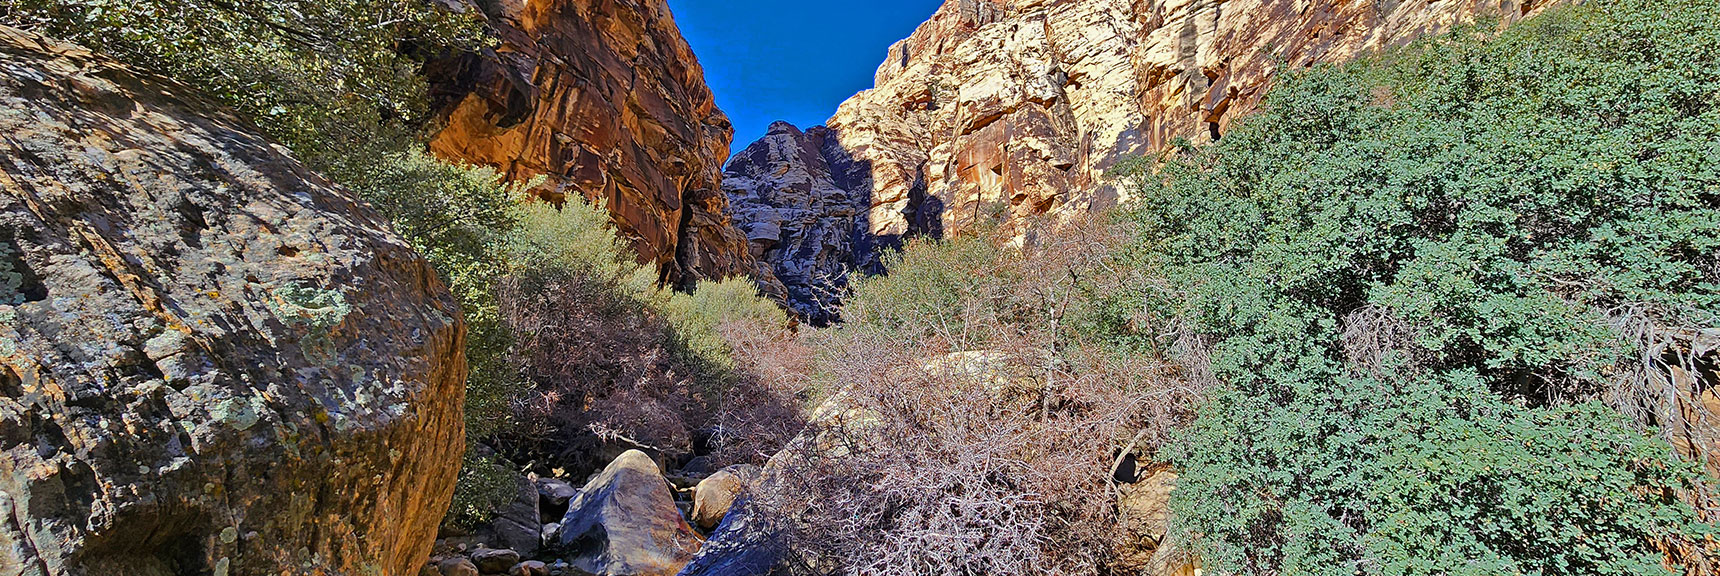 Brush and Boulders Along Canyon Base Ahead. But Beautiful Creek & Bird Sounds | Ice Box Canyon | Red Rock Canyon NCA, Nevada | Las Vegas Area Trails | David Smith